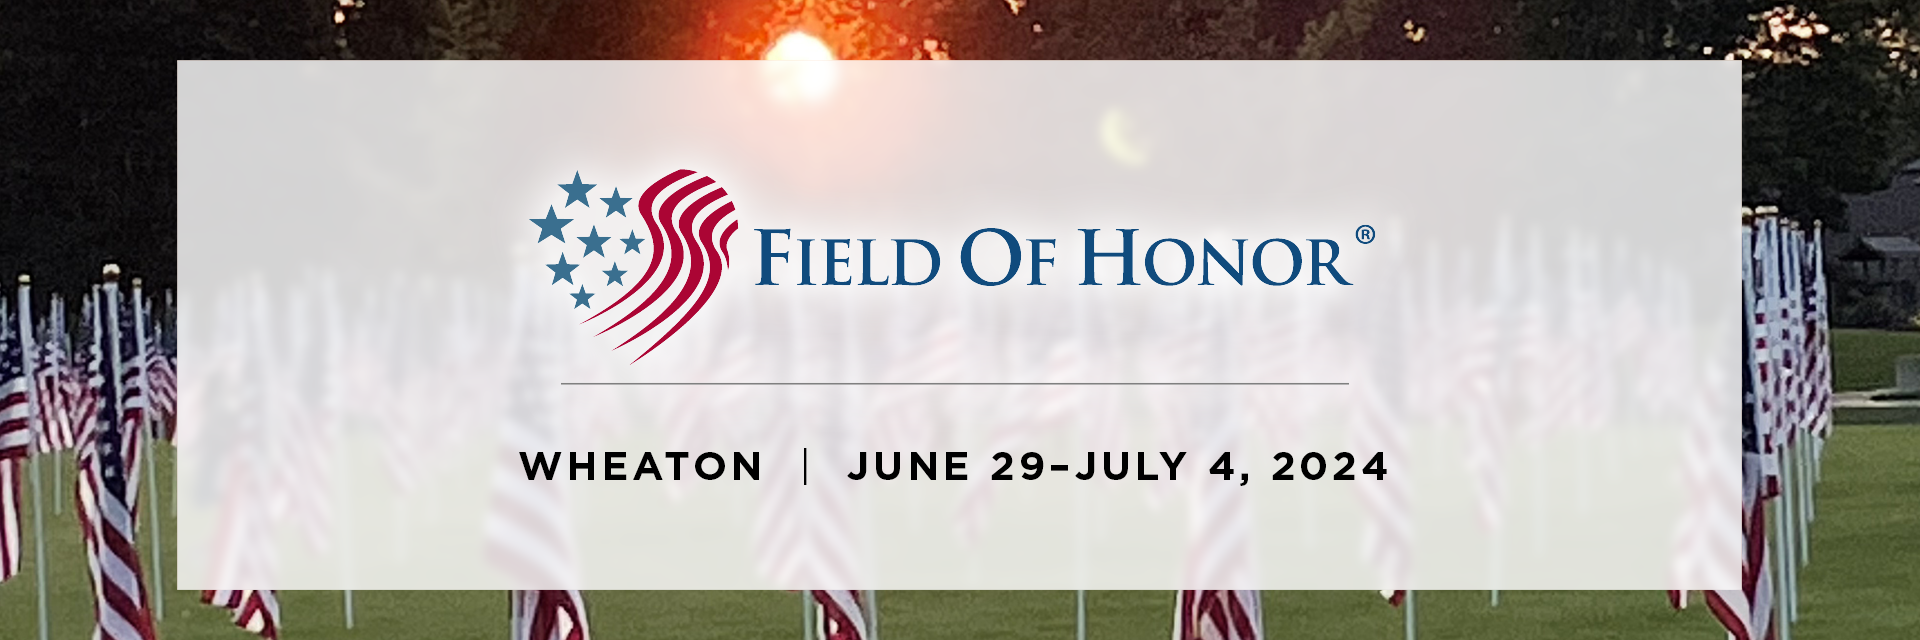 Field of Honor-Wheaton-2024